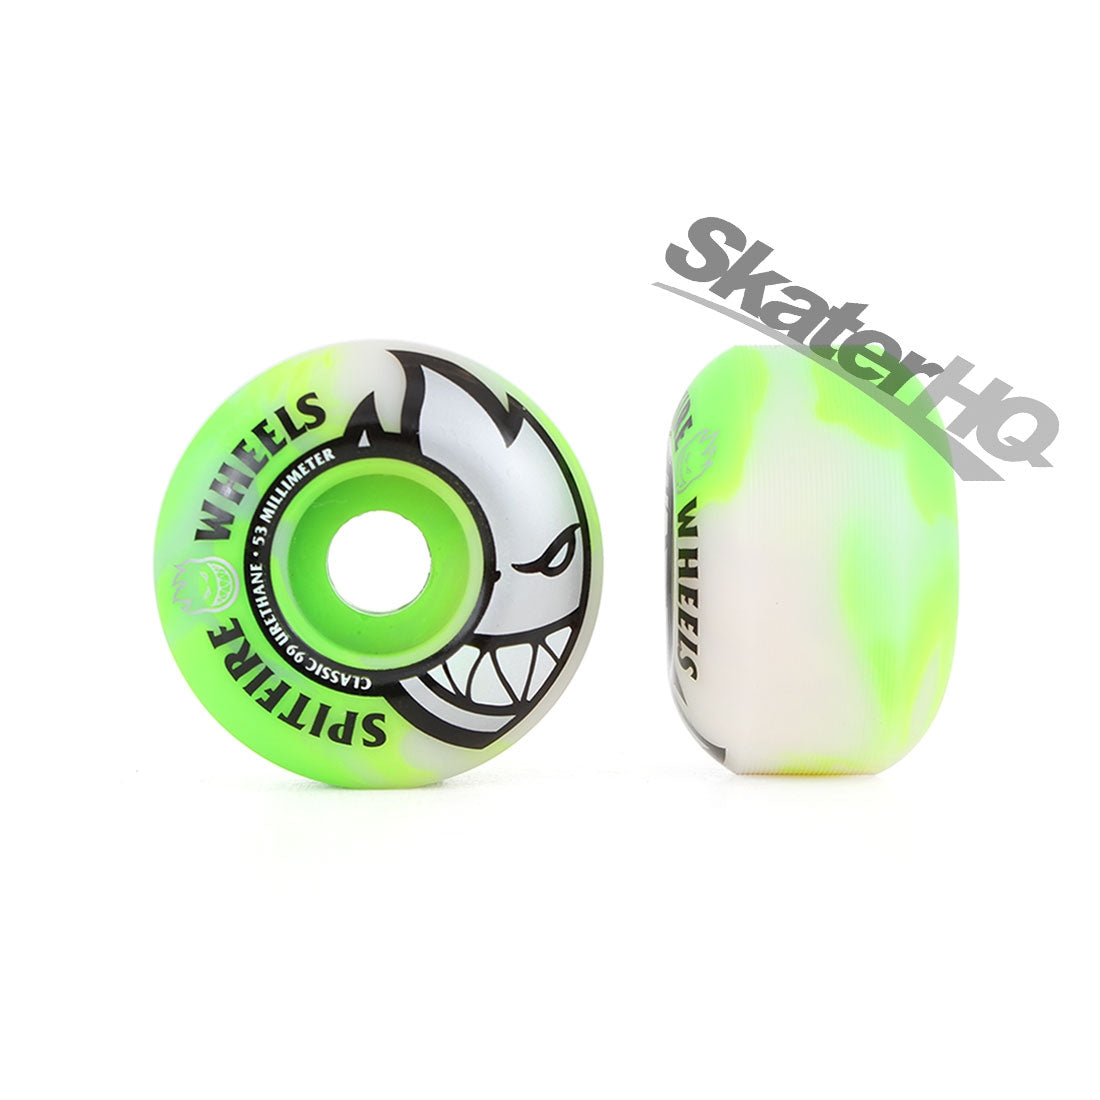 Spitfire Bighead Swirl 53mm/99a - Green/White Swirl Skateboard Wheels